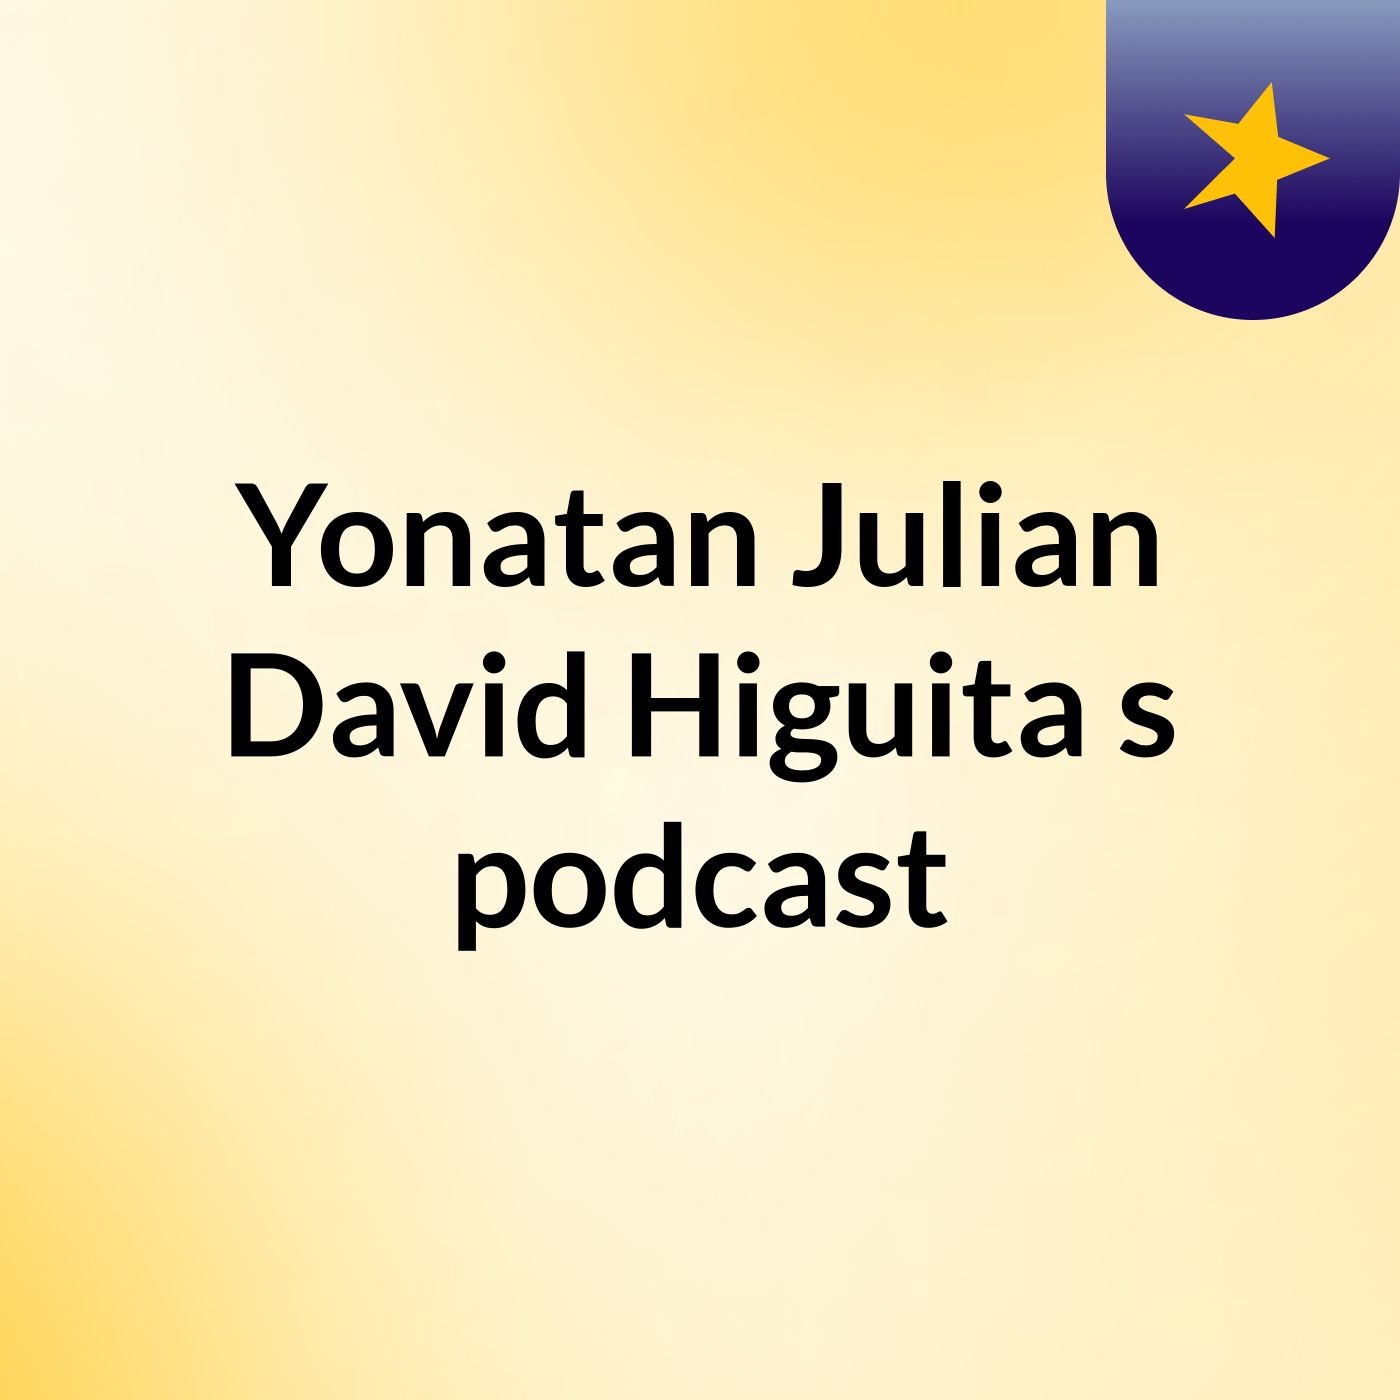 Yonatan Julian David Higuita's podcast